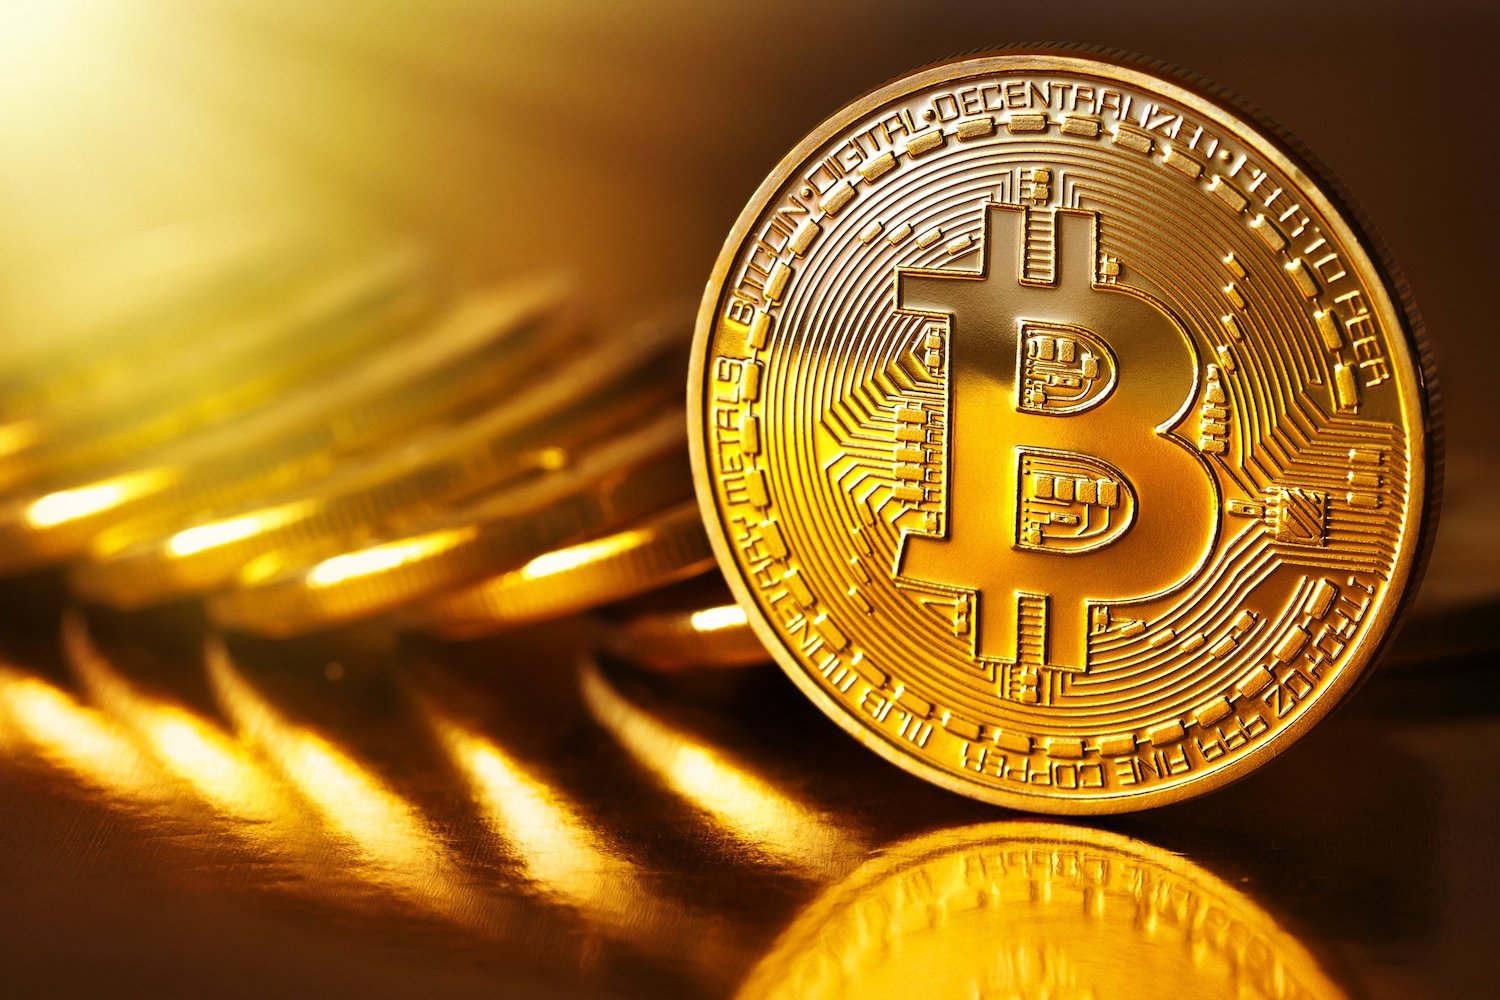 Bitcoin is now worth over nine thousand dollars